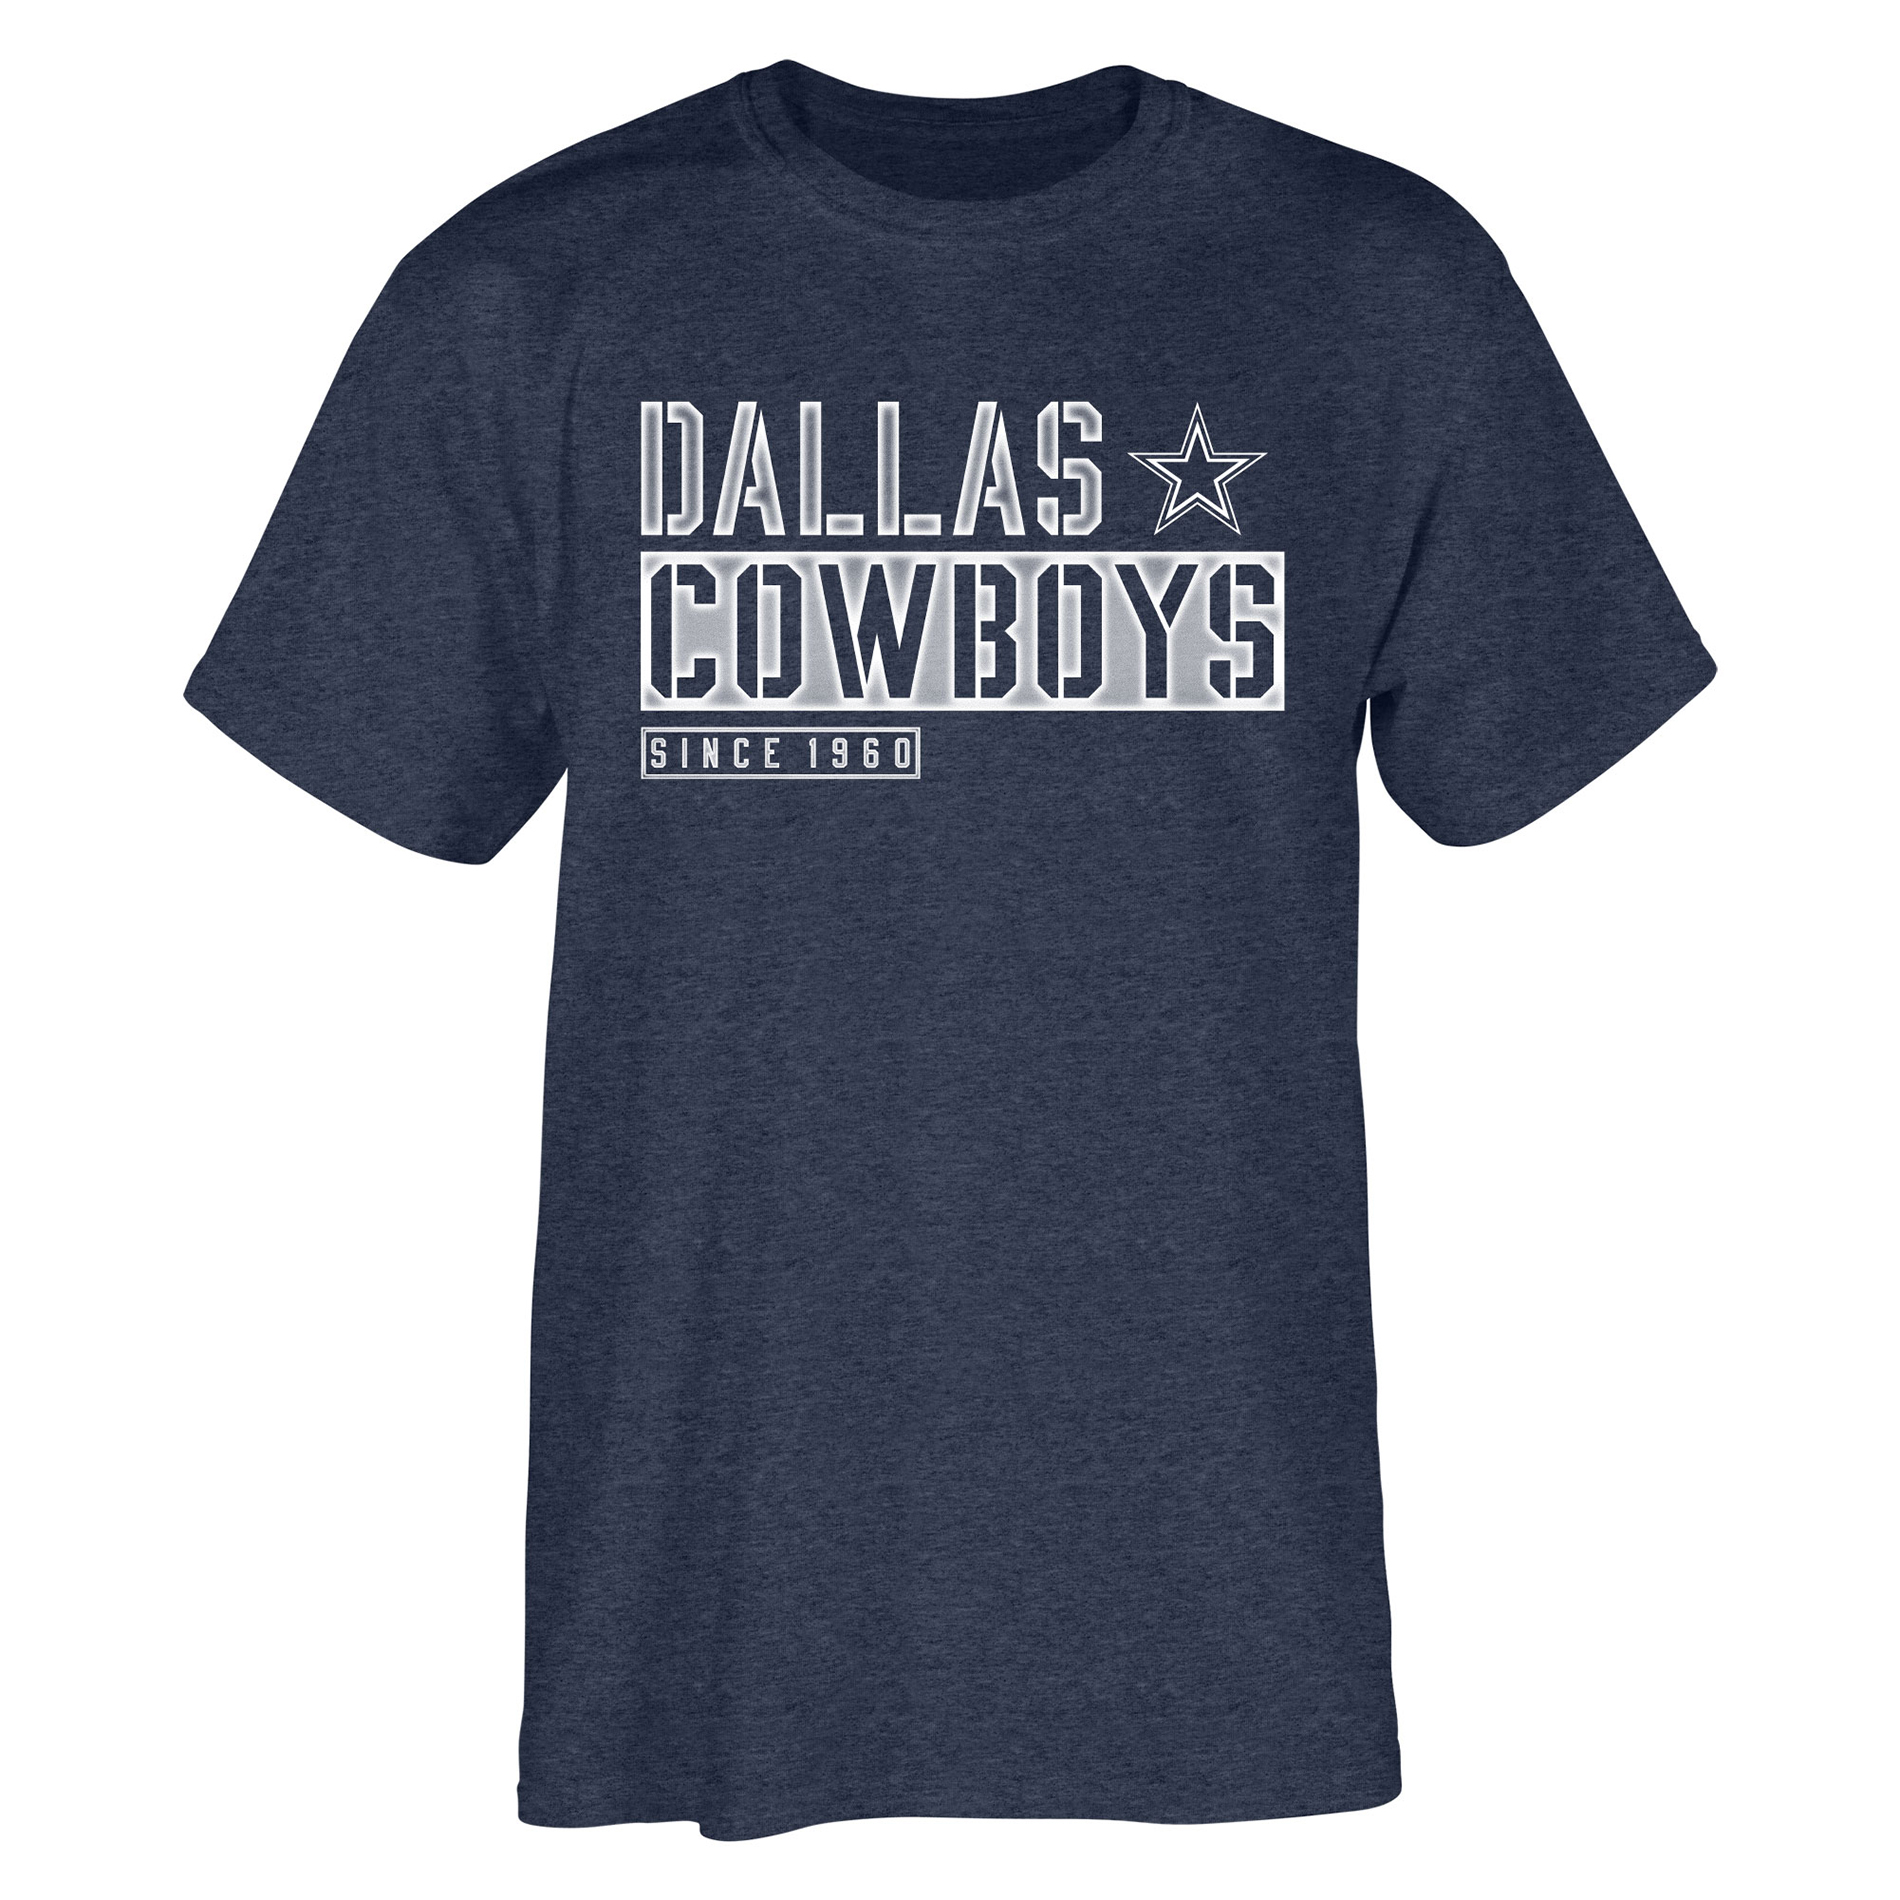 where to find dallas cowboys apparel